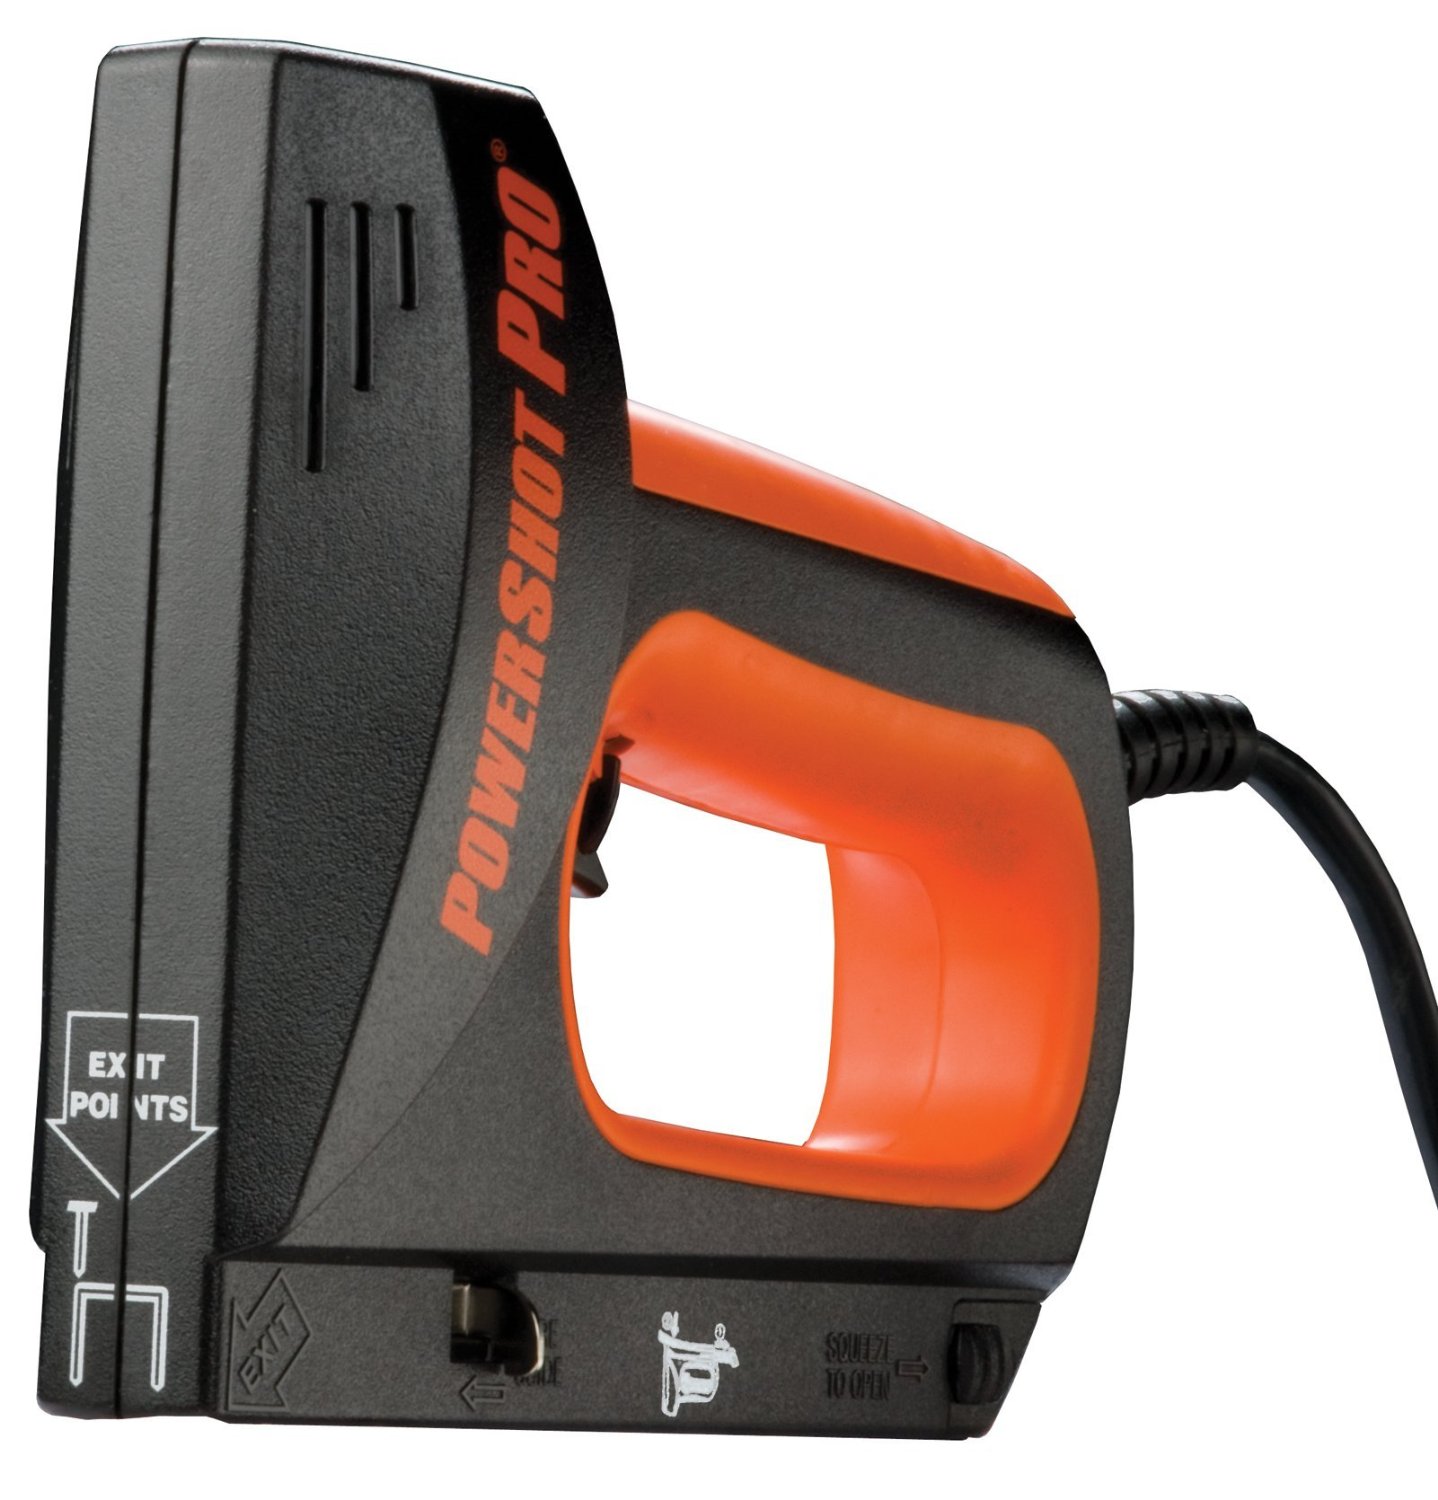 powershot pro electric staple and nail gun manual downloads